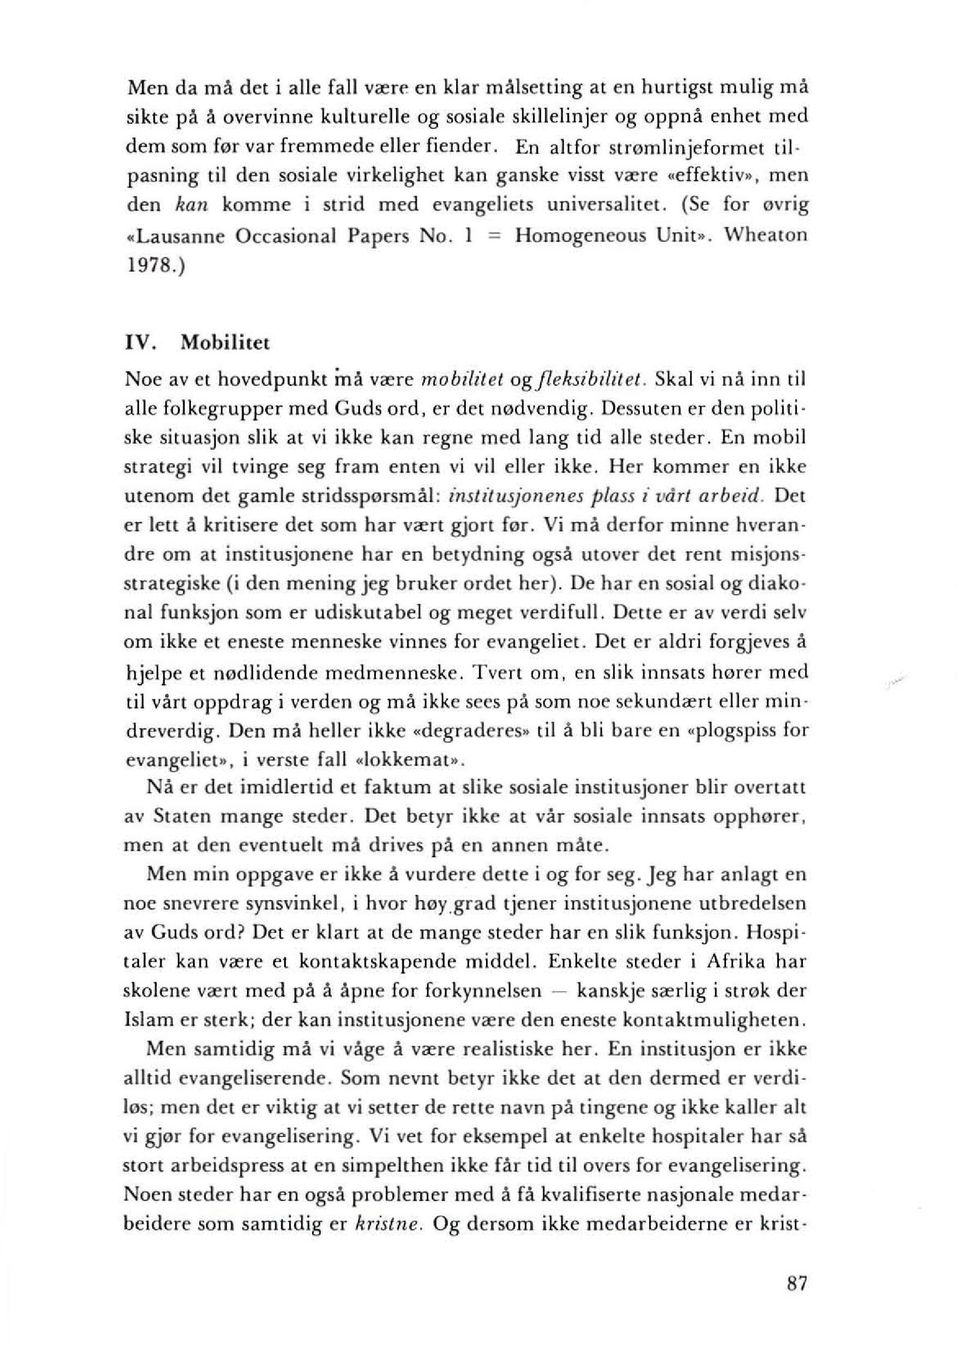 (Se for ovrig «Lausanne Occasional Papers No. 1 = 1978.) Homogeneous Unit». Wheaton IV. Mobilitet Noe av et hovedpunkt ina vrere mobilitet ogjleksibihtel.